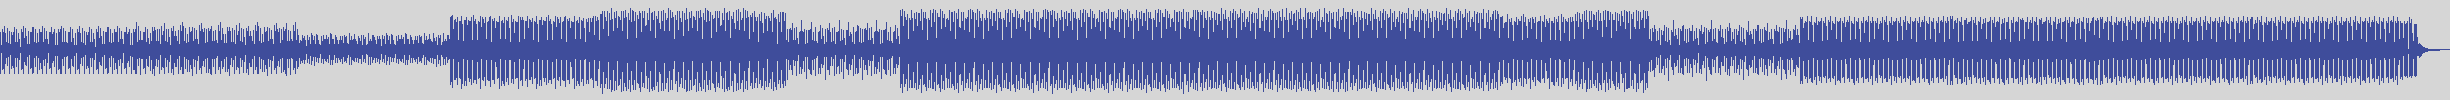 nf_boyz_records [NFY055] Good Stripe - Stripper [Original Mix] audio wave form